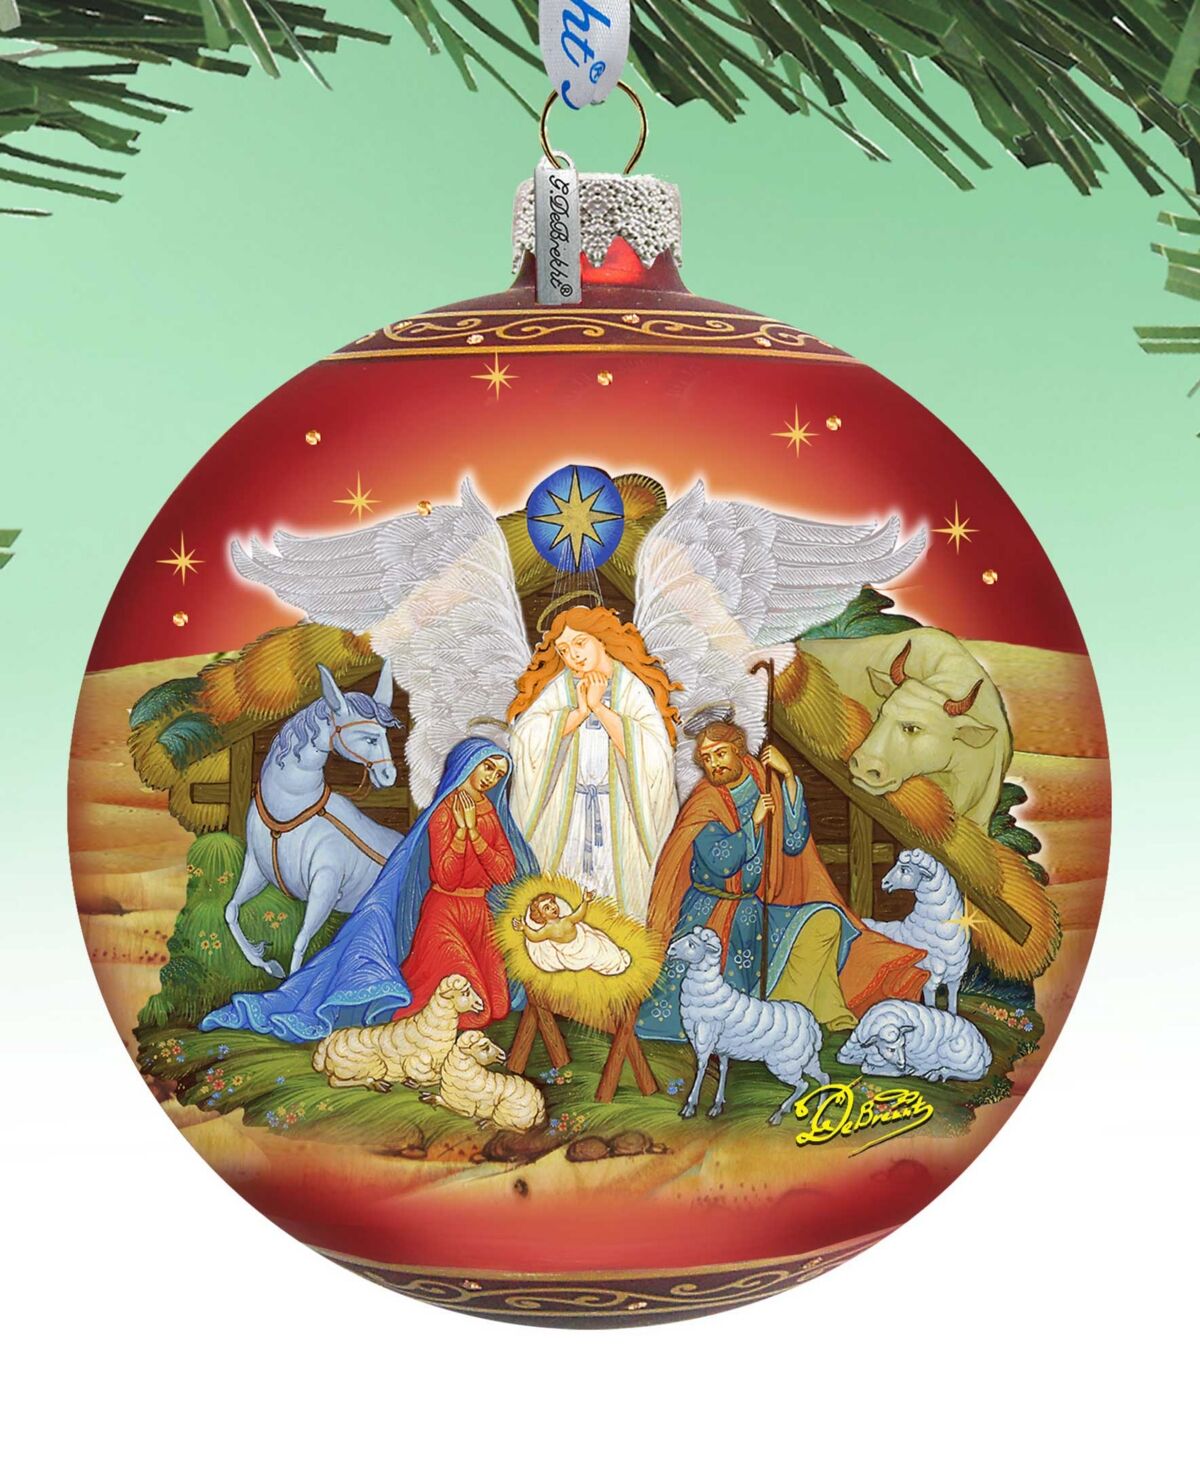 Designocracy Guarding Light Nativity Large Holiday Glass Collectible Ornaments G. DeBrekht - Multi Color